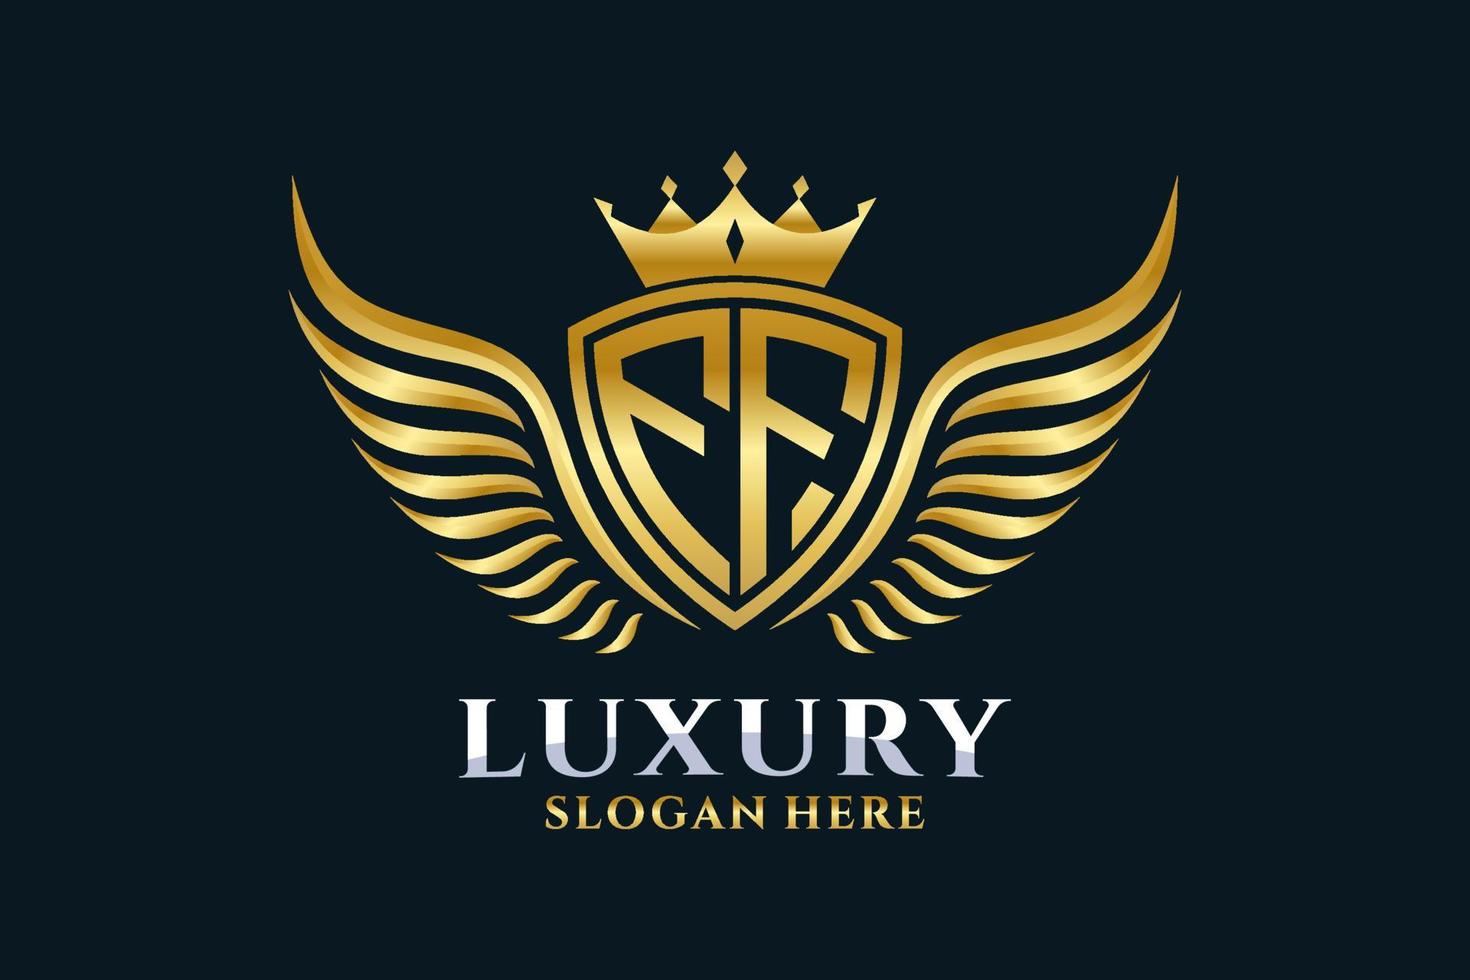 luxe Koninklijk vleugel brief ff kam goud kleur logo vector, zege logo, kam logo, vleugel logo, vector logo sjabloon.